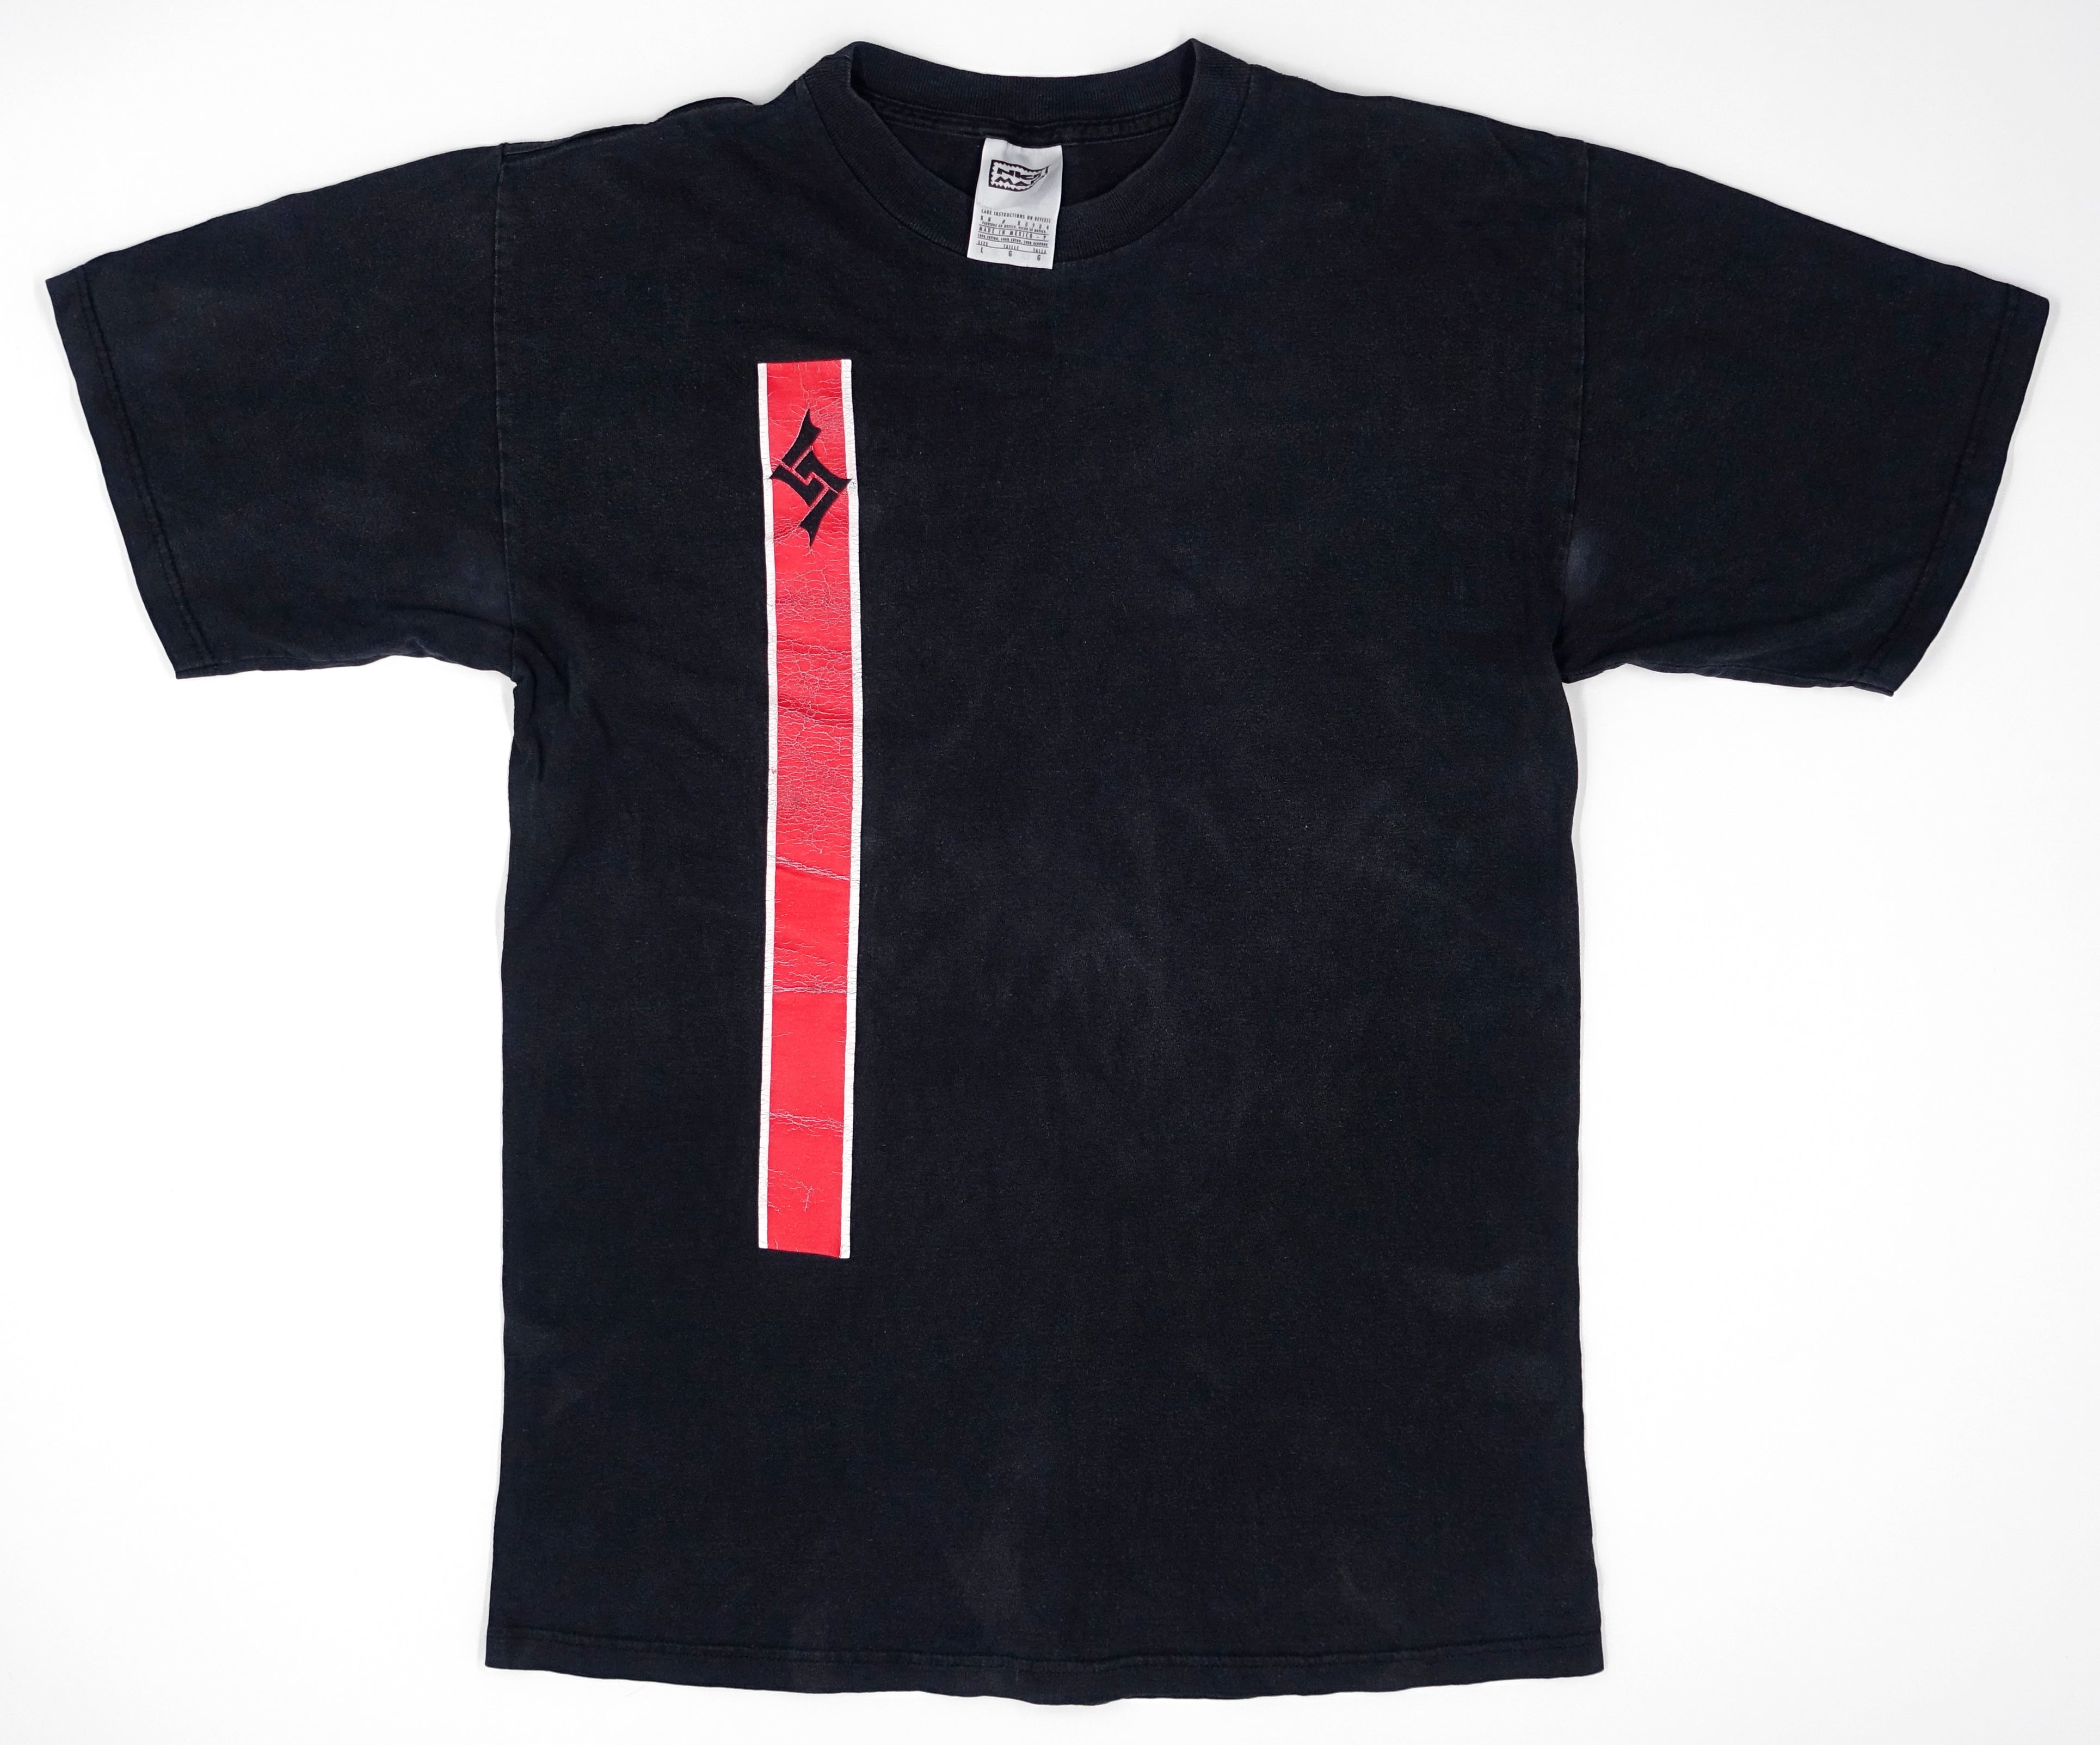 Soundgarden – Down On The Upside 1997 Tour Shirt Size Large